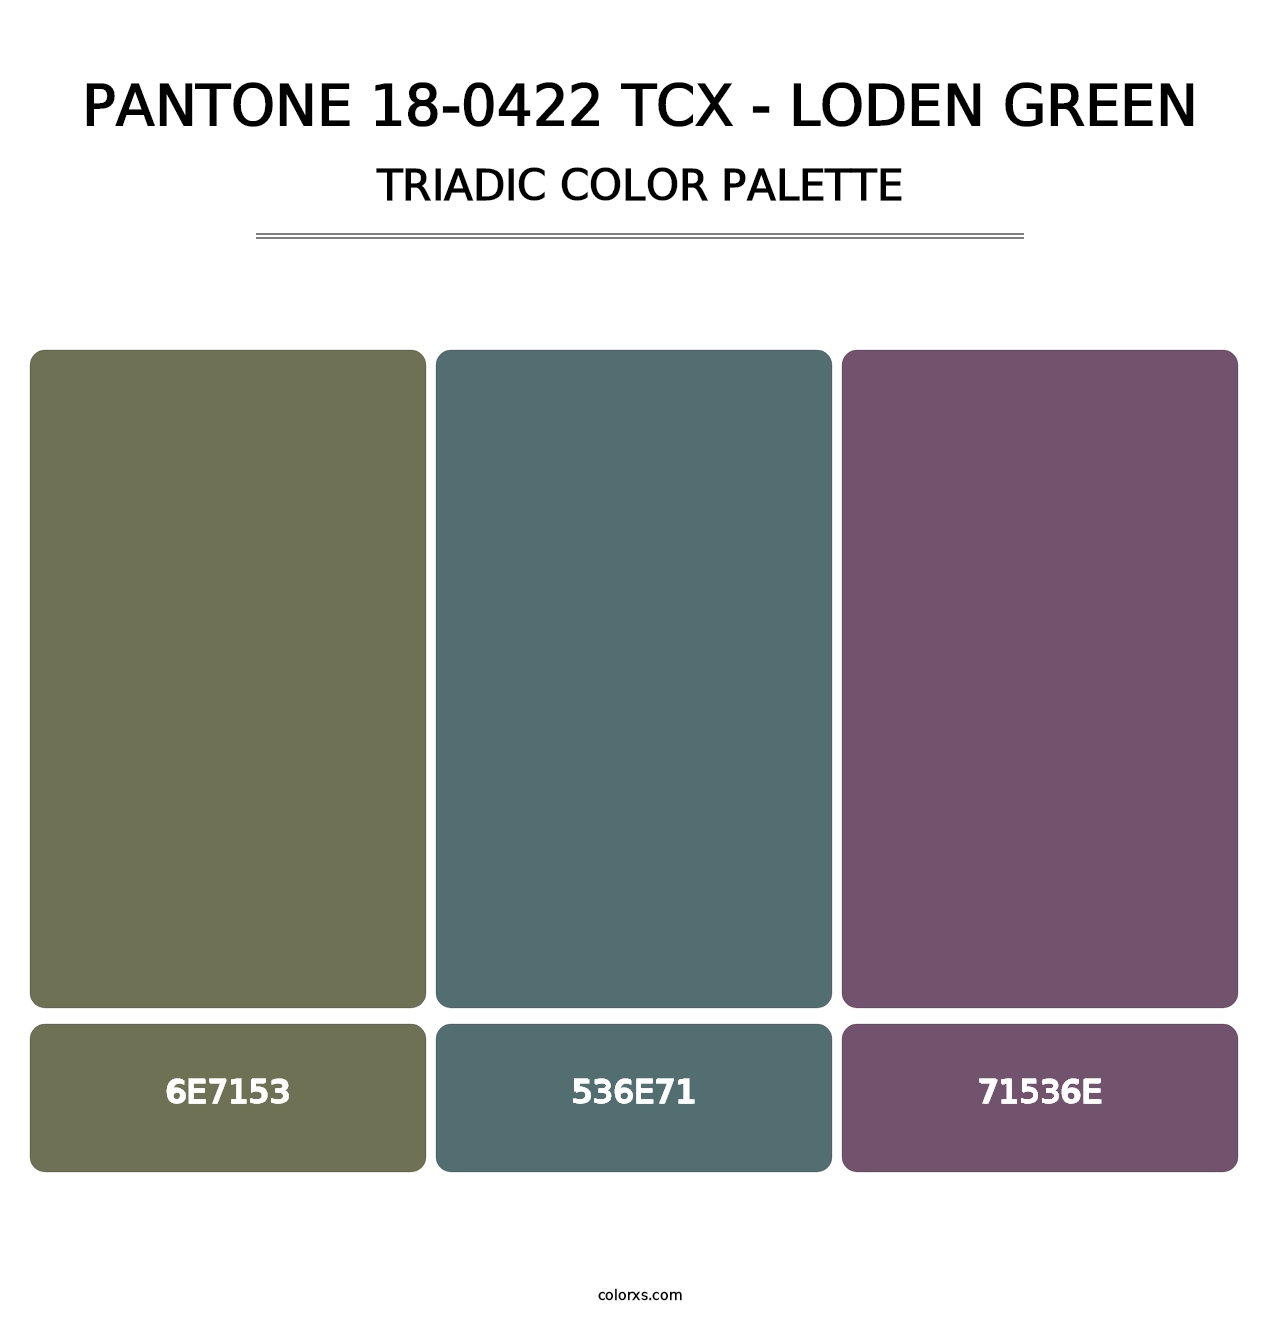 PANTONE 18-0422 TCX - Loden Green - Triadic Color Palette